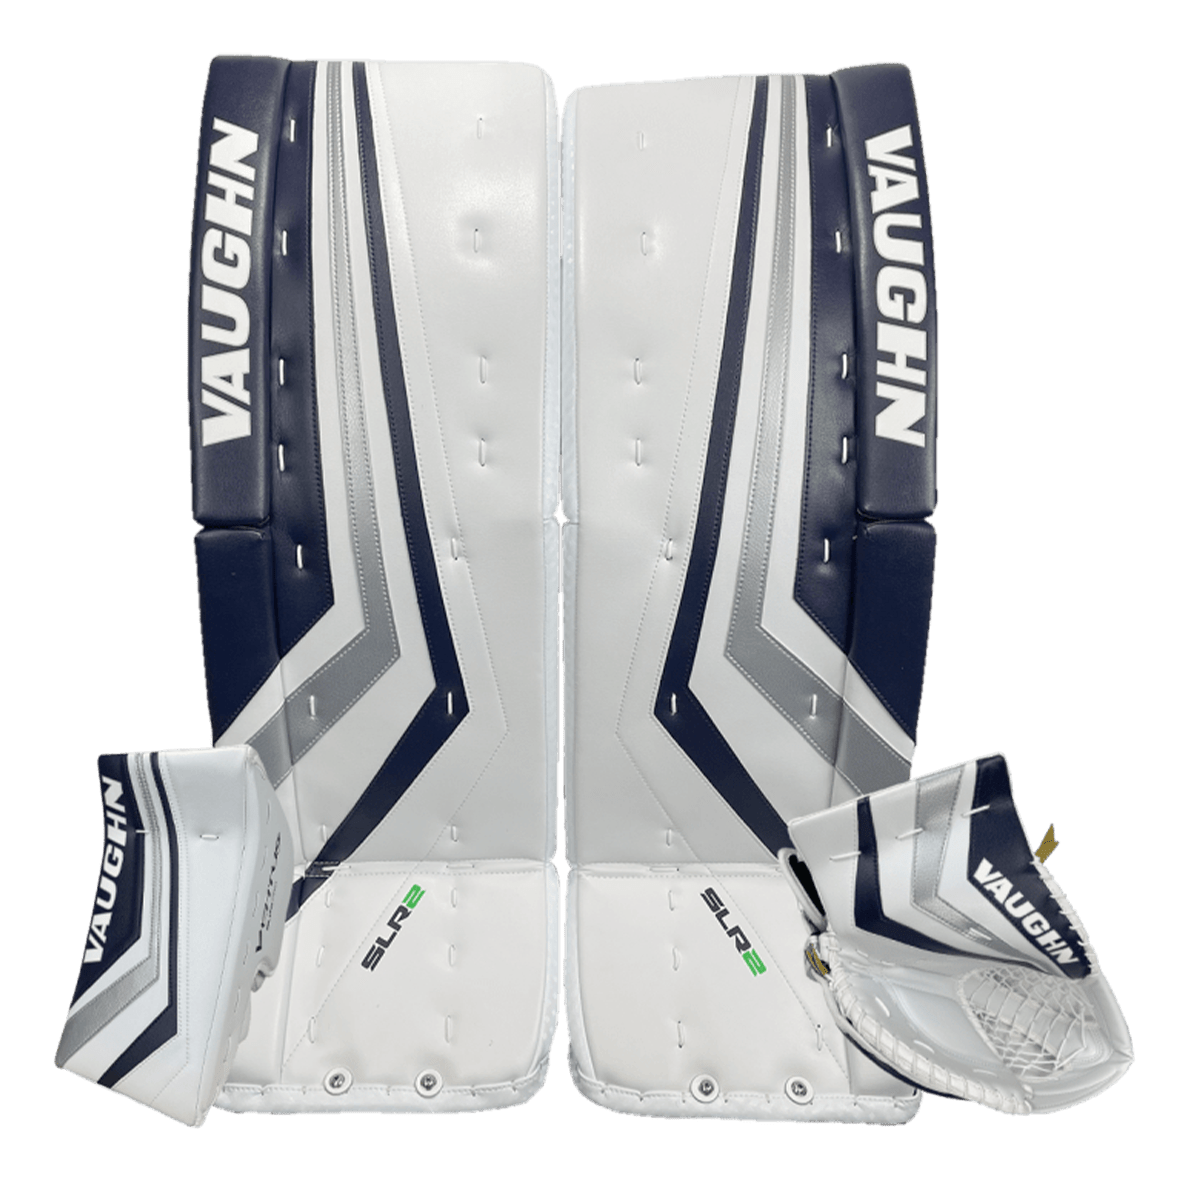 Vaughn Hockey – Premium Goalie Gear